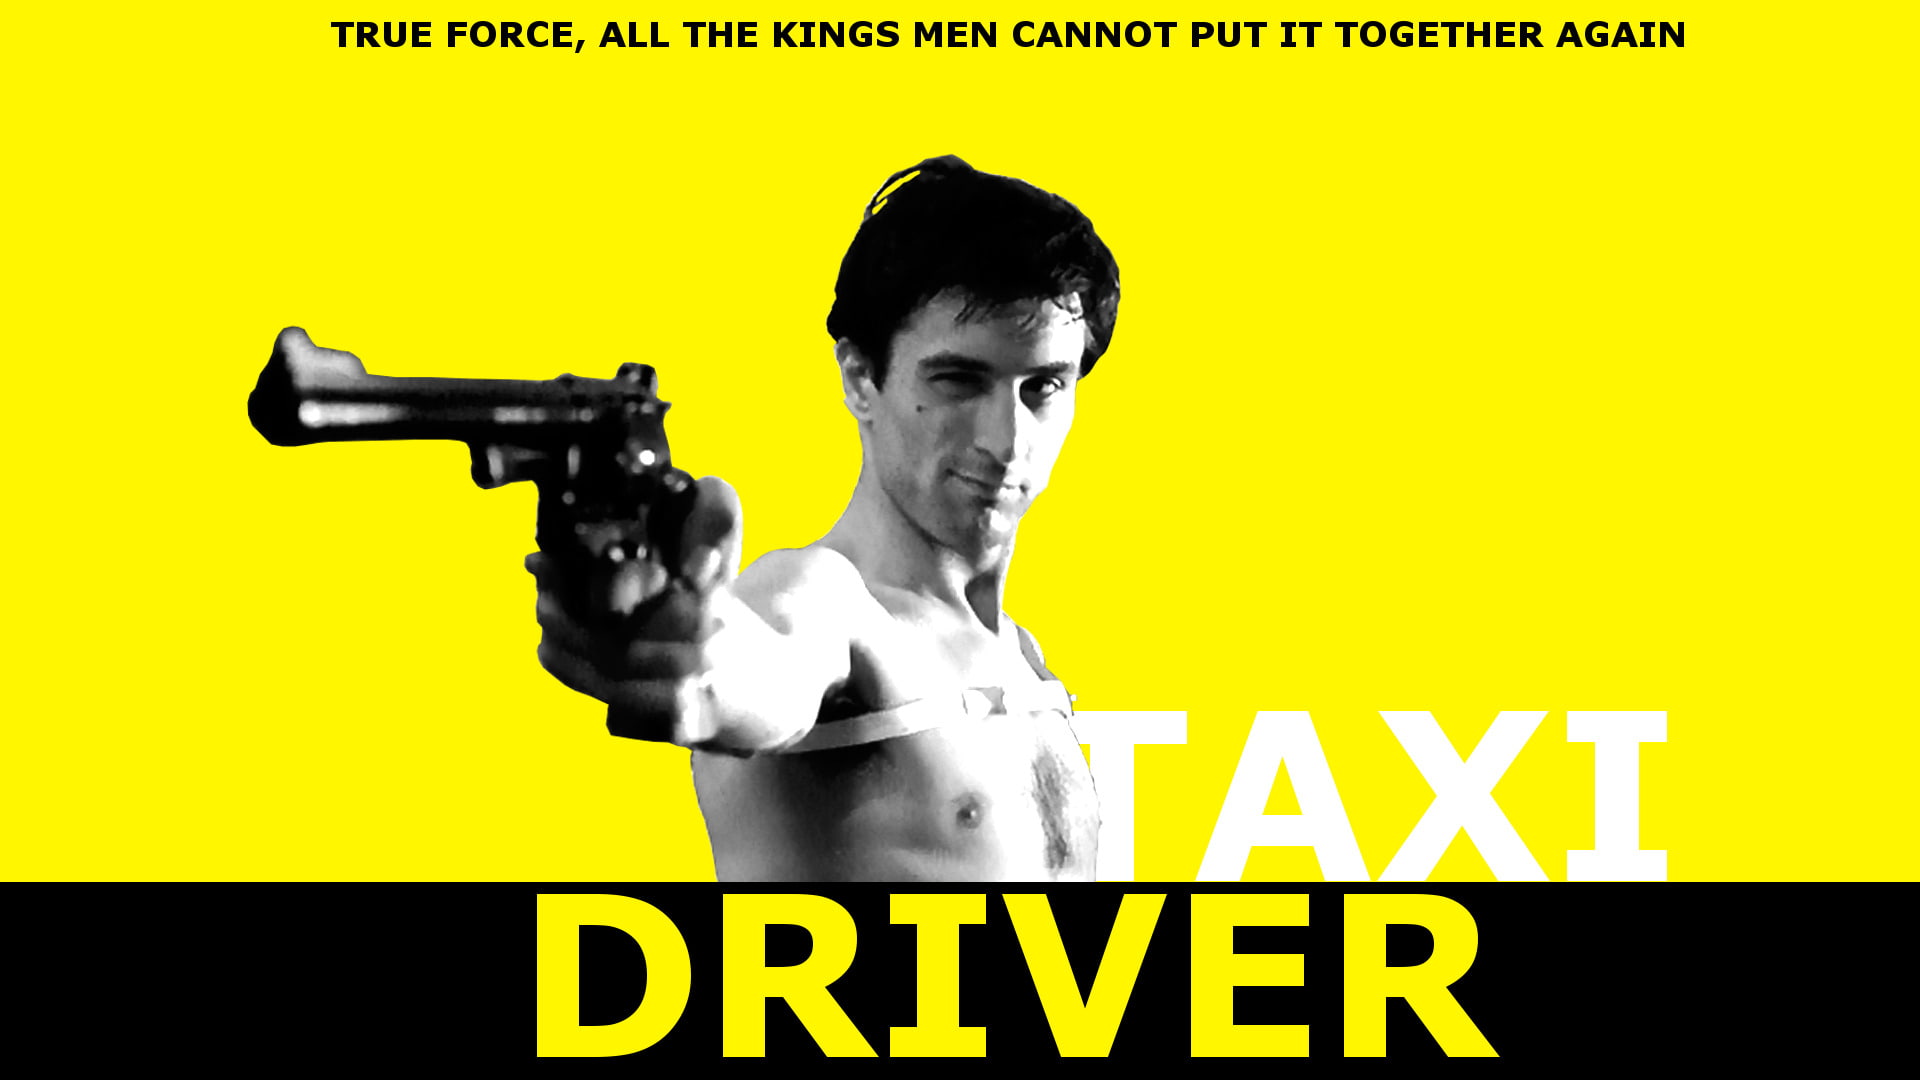 Movie, Taxi Driver, Robert De Niro, yellow, communication, young adult